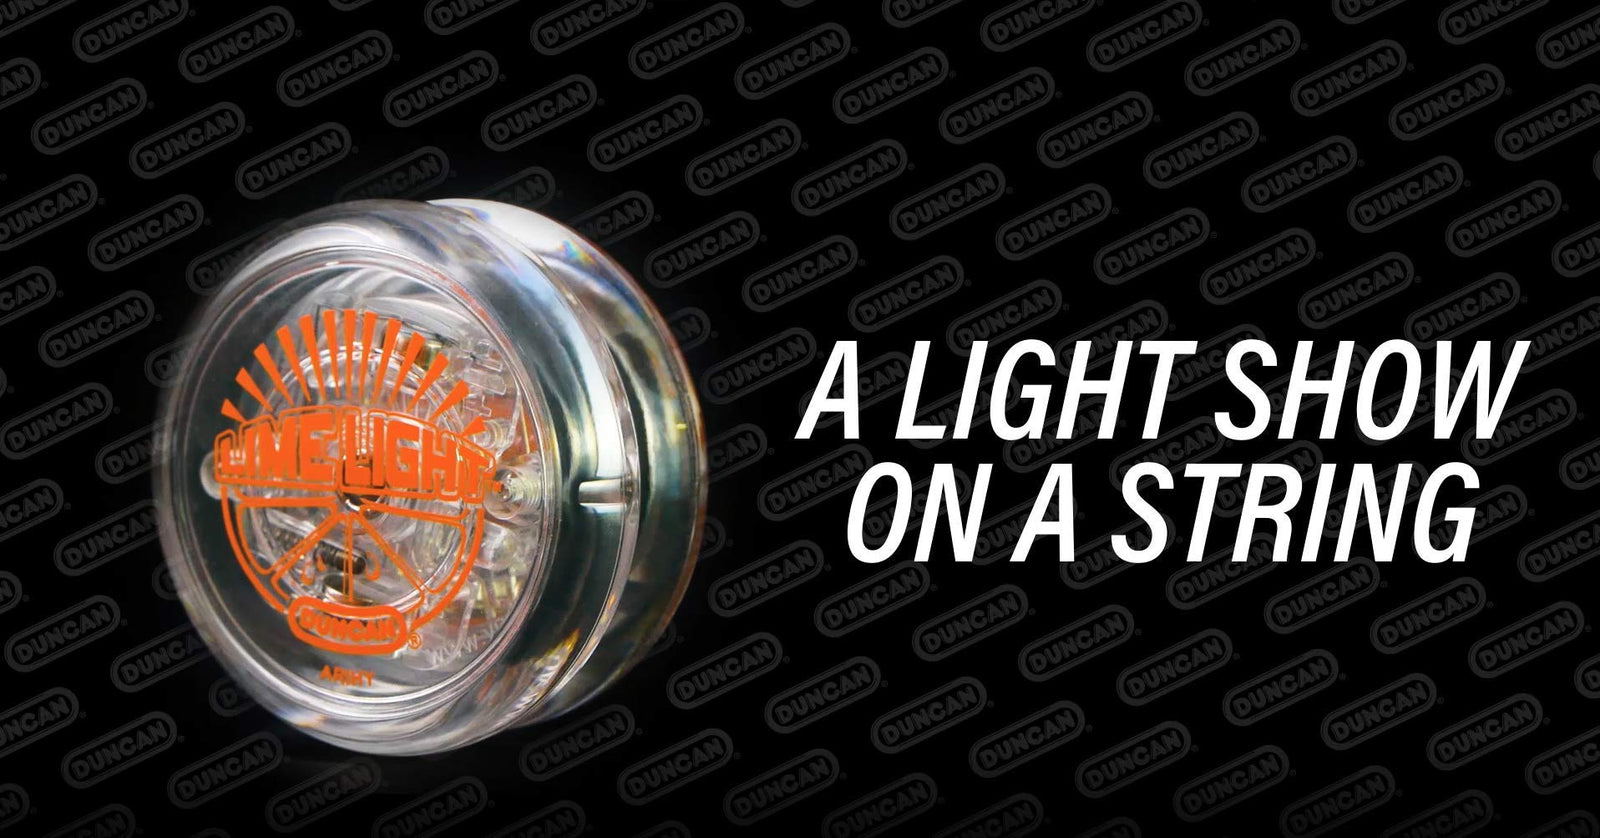 Duncan Toys Limelight LED Light-Up Yo-Yo, Beginner Level Yo-Yo with LED Lights, Clear and Orange